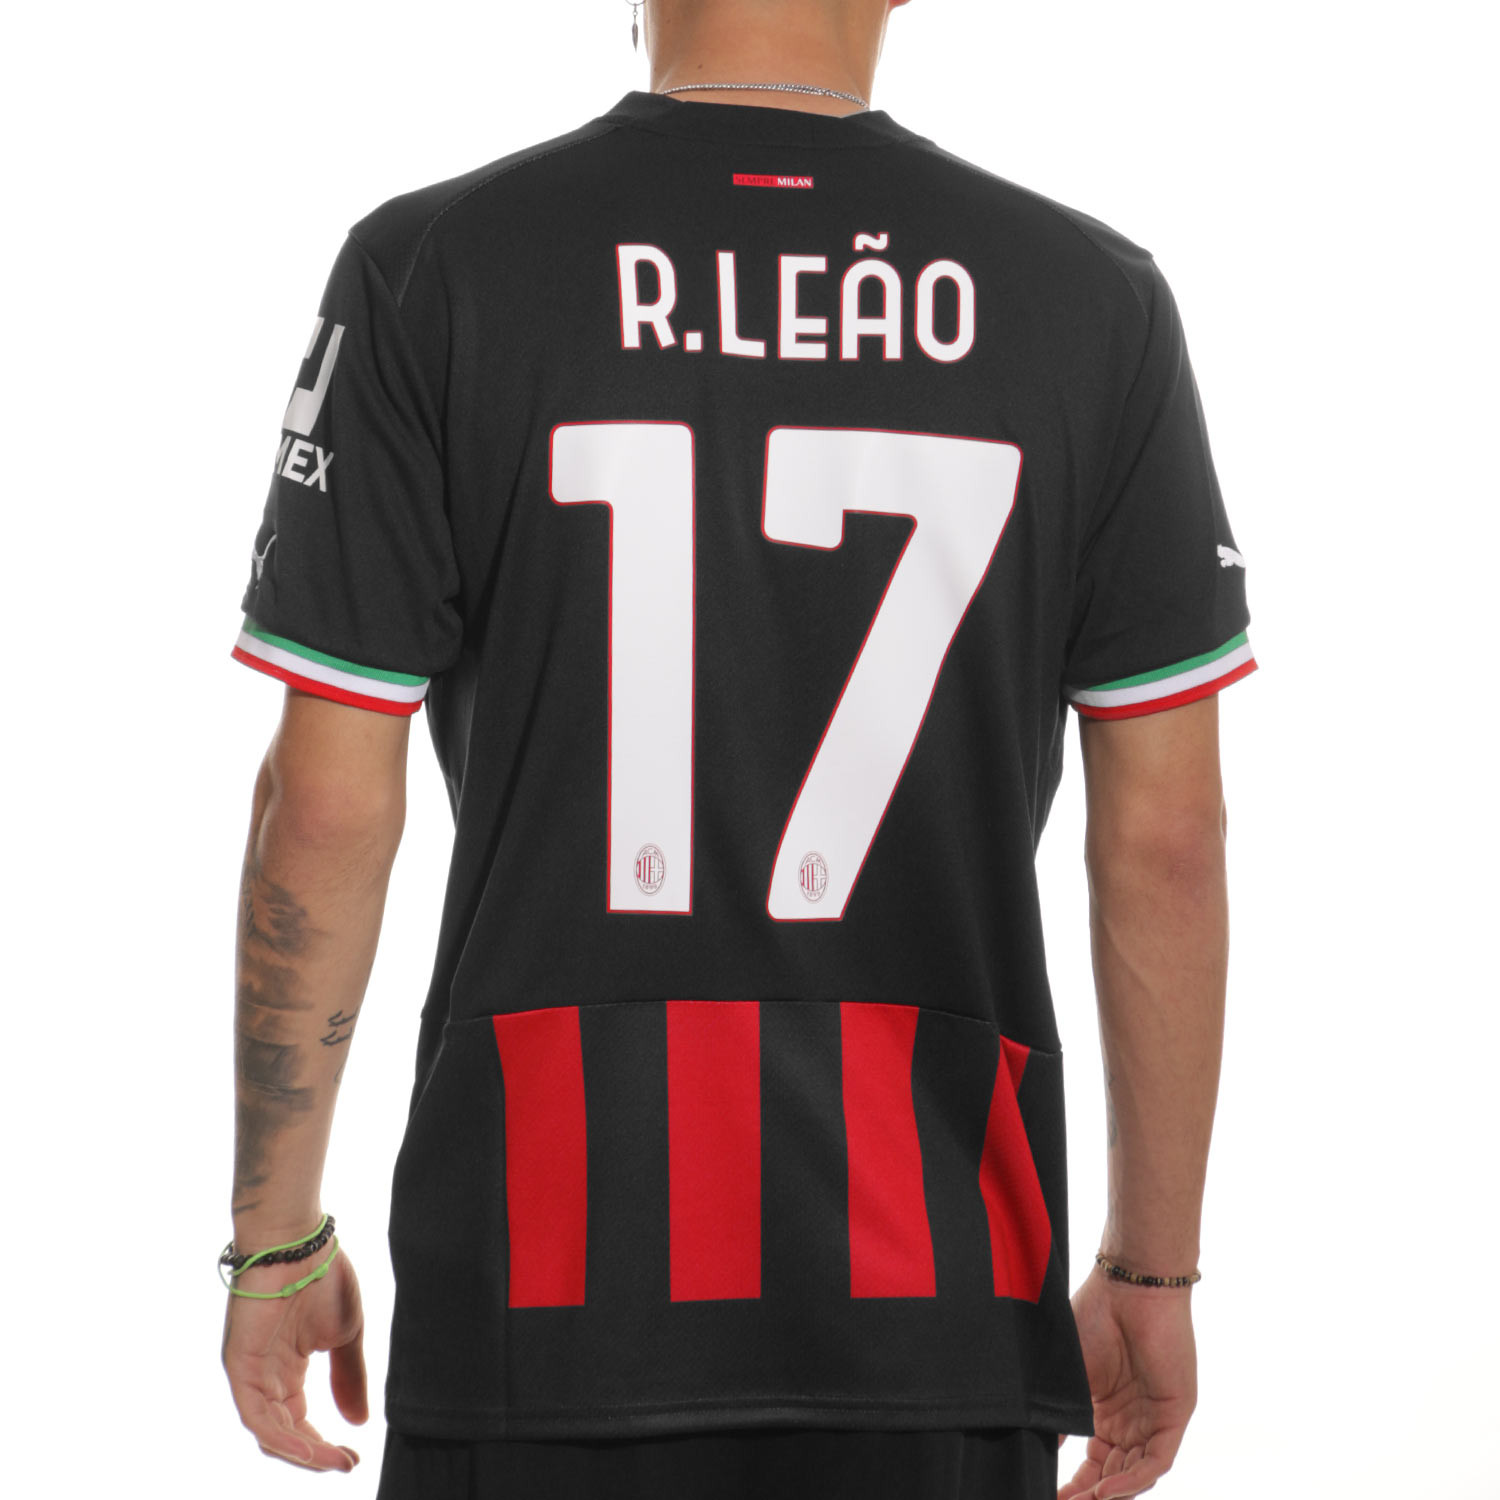 Camiseta Puma AC Milan 2022 2023 R. Leão roja negra